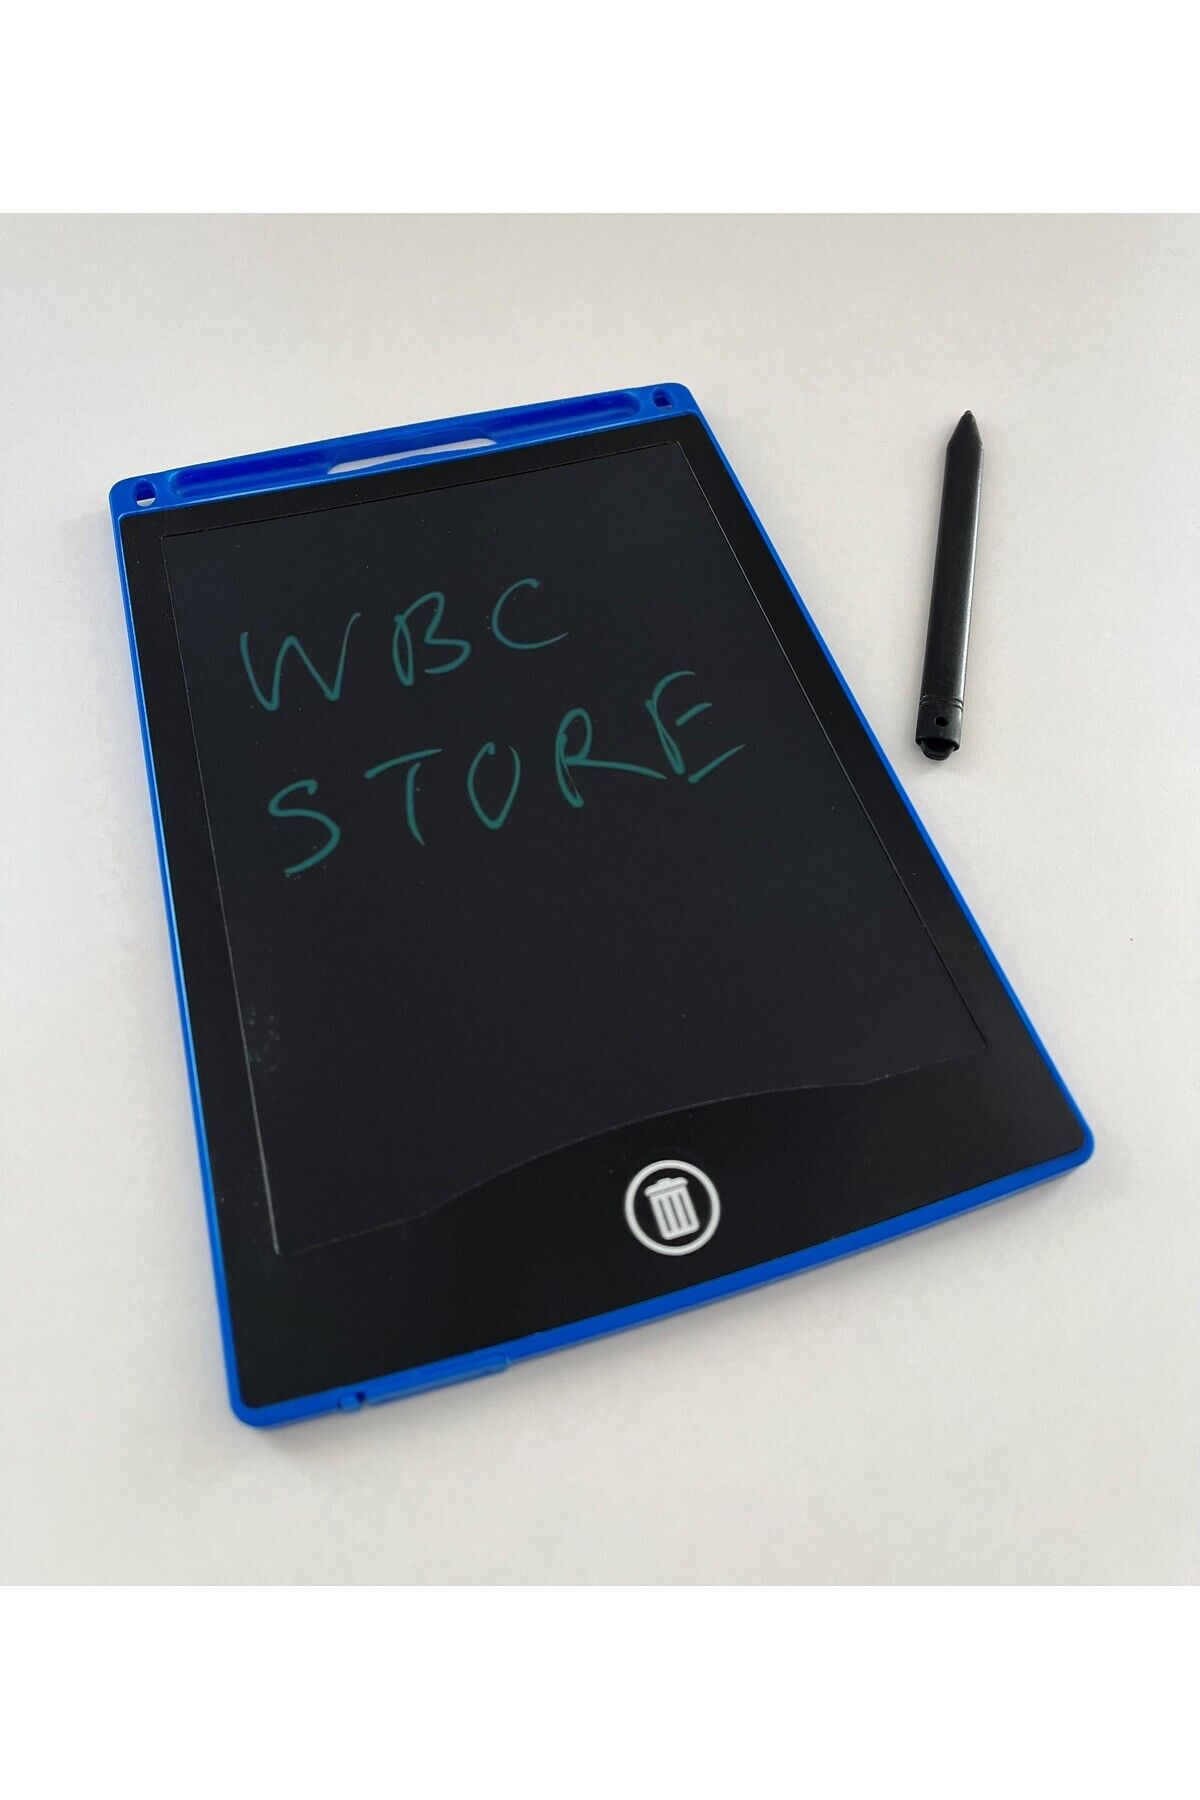 WBC STORE Lcd Writing Tablet Çizim Yazı Tahtası 8.5 Inç Dijital Kalemli